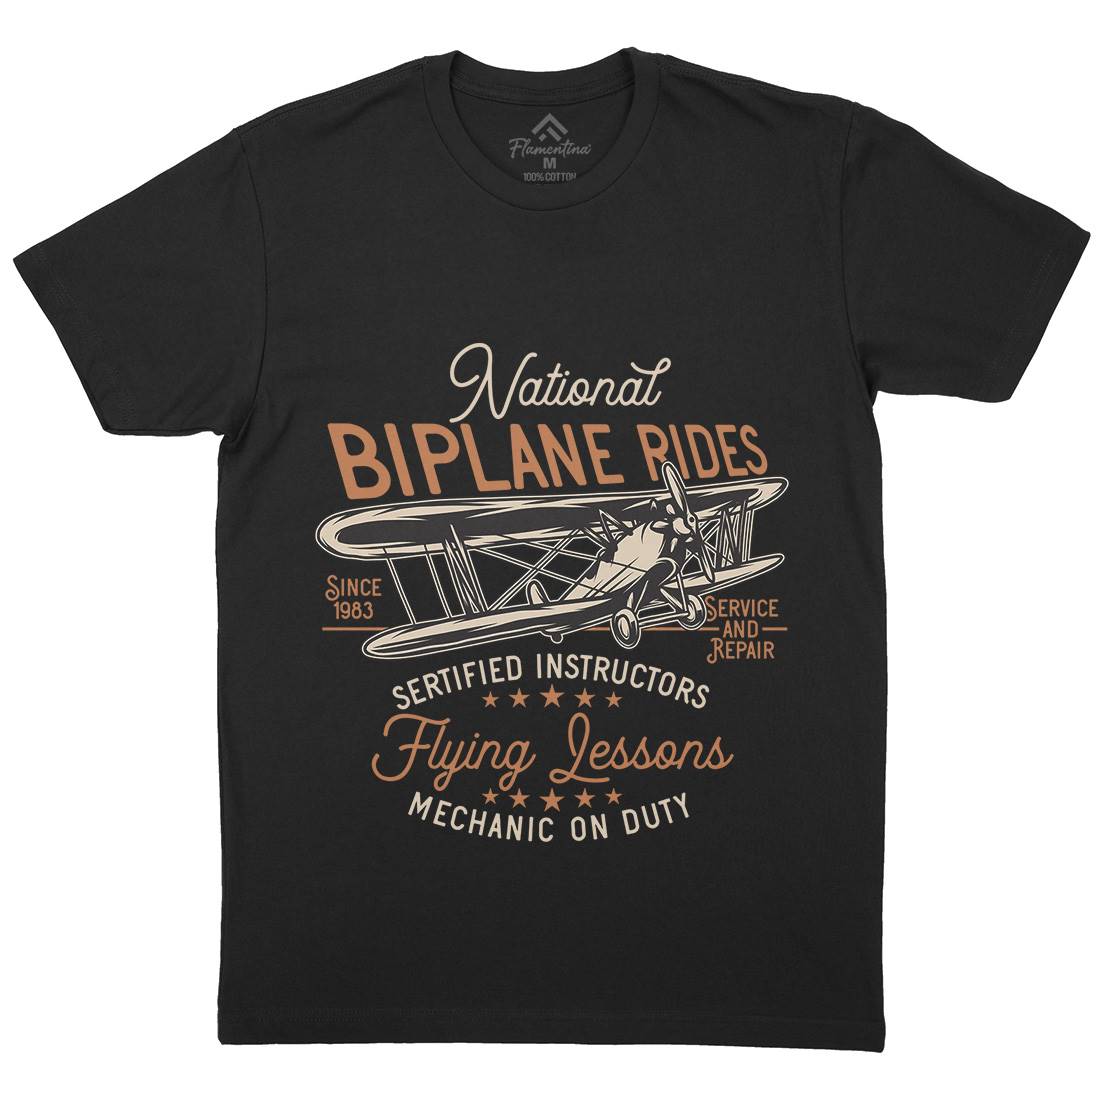 Biplane Rides Mens Organic Crew Neck T-Shirt Vehicles D910